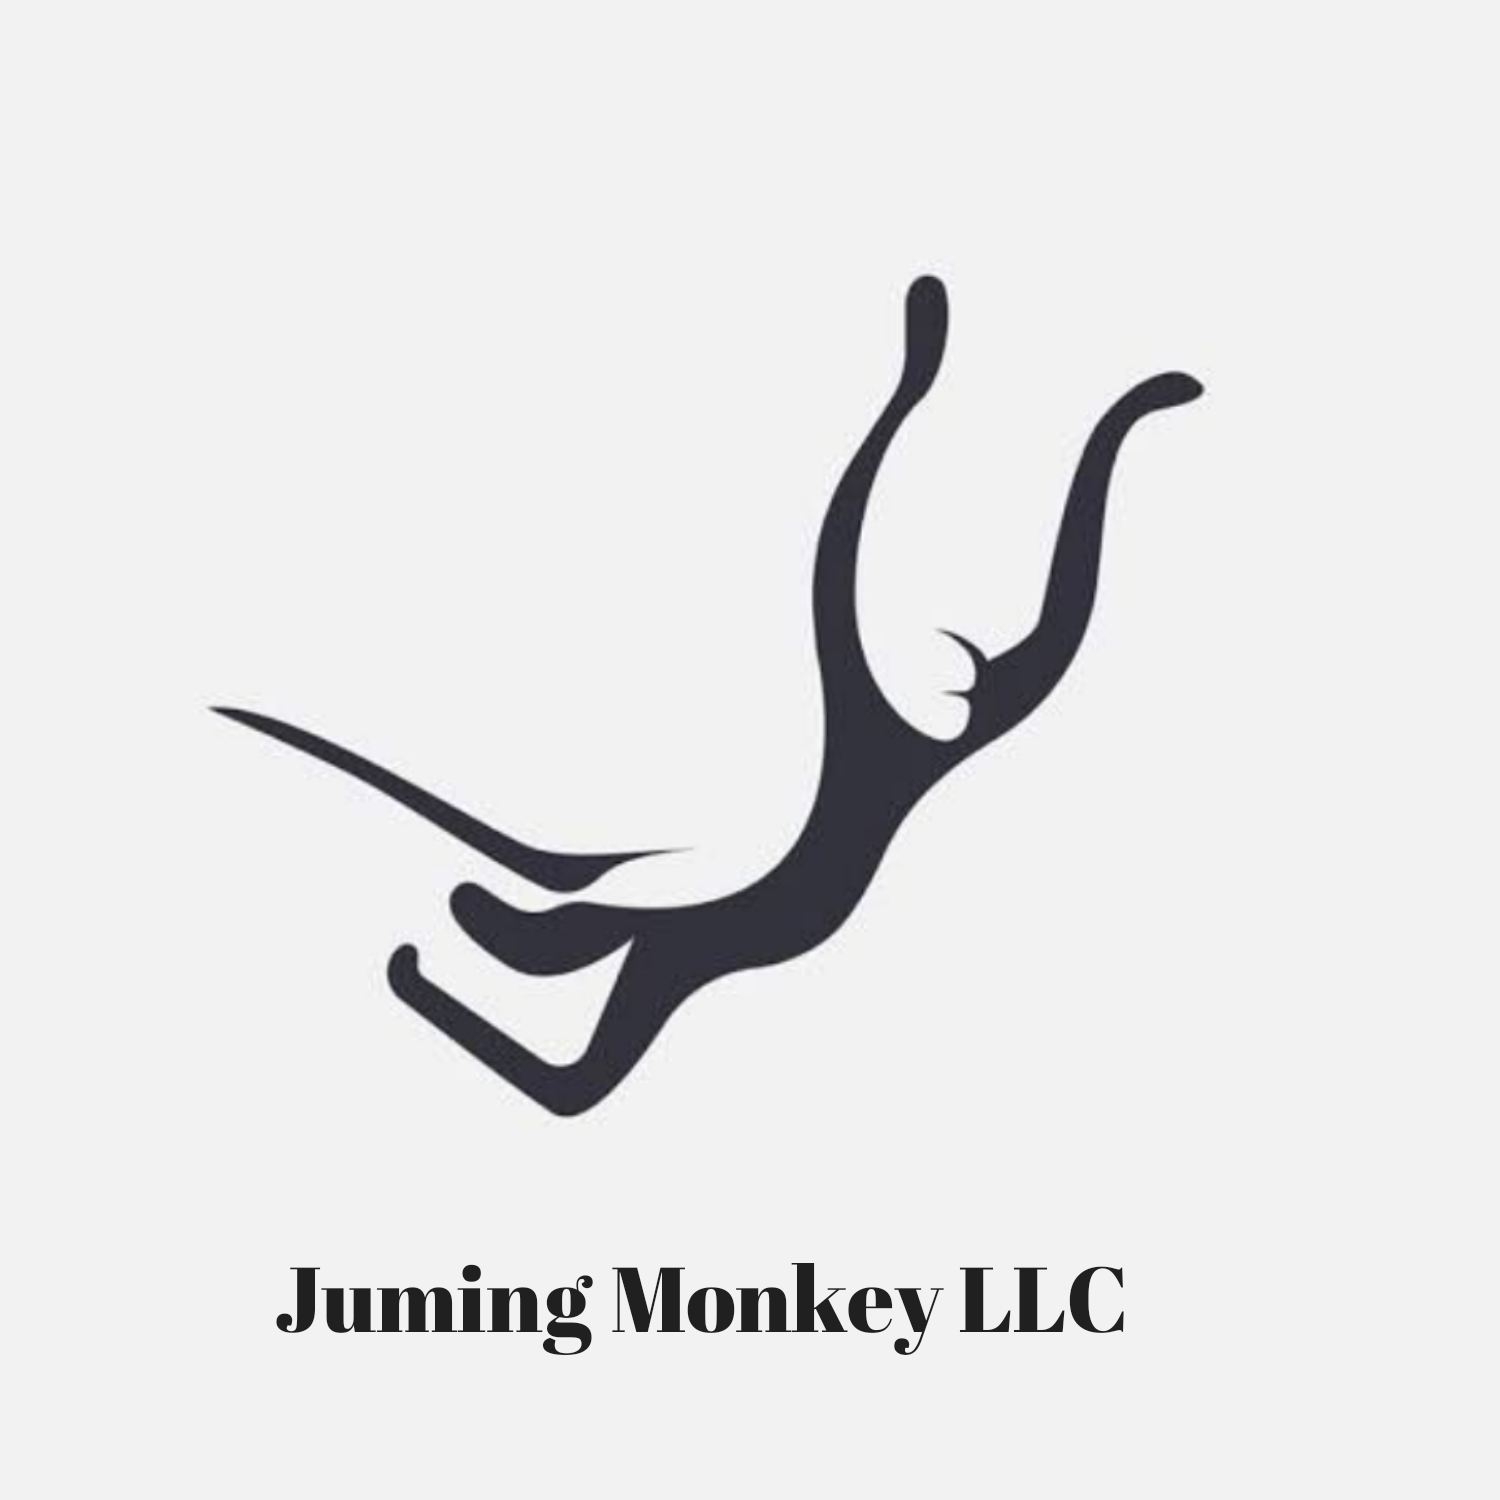 Jumping Monkey LLC